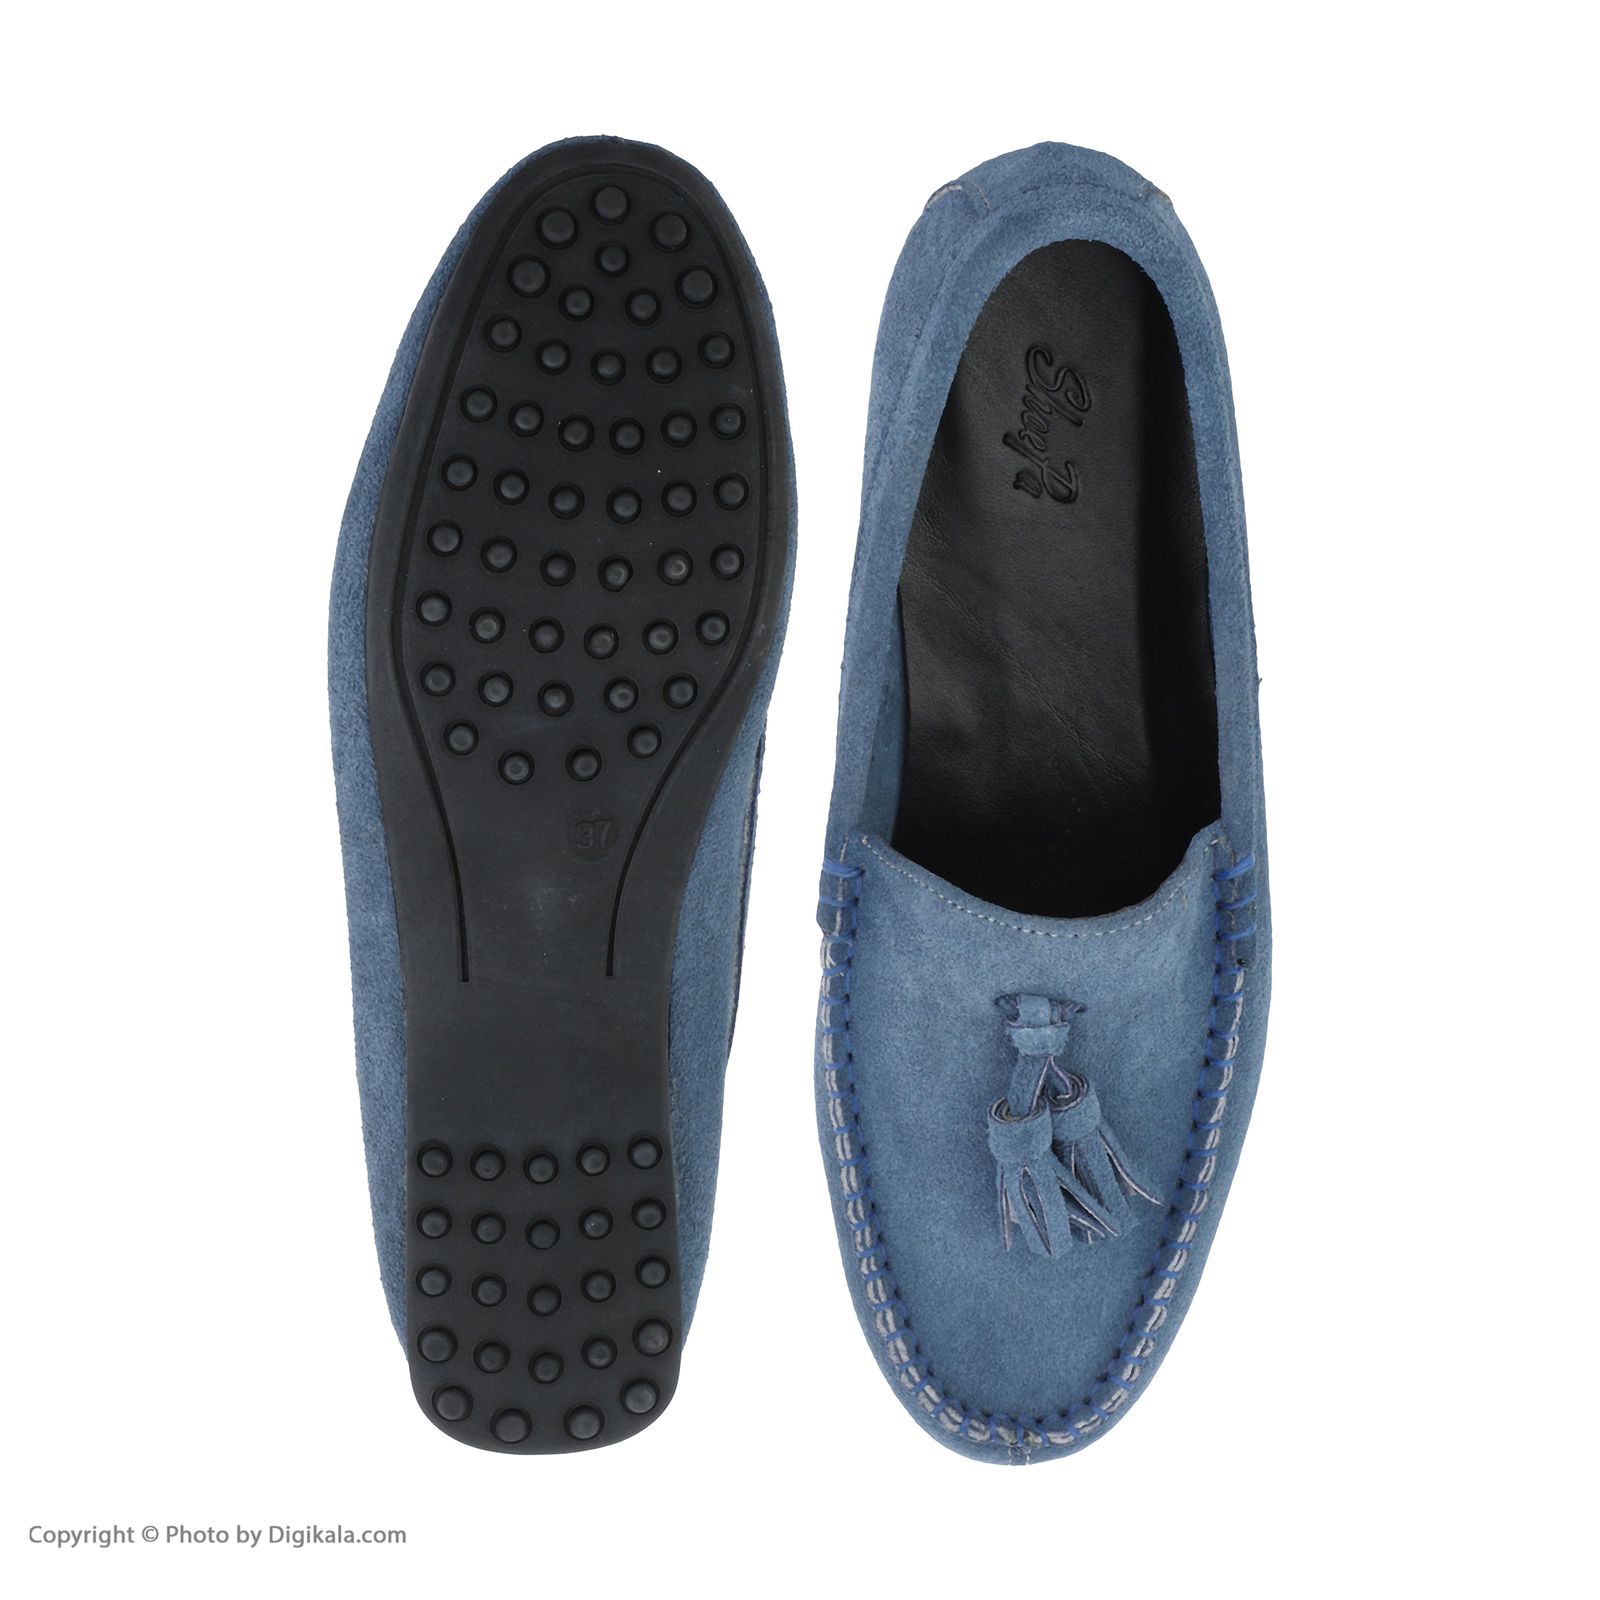  کفش کالج زنانه شوپا مدل skb1000sky blue -  - 3